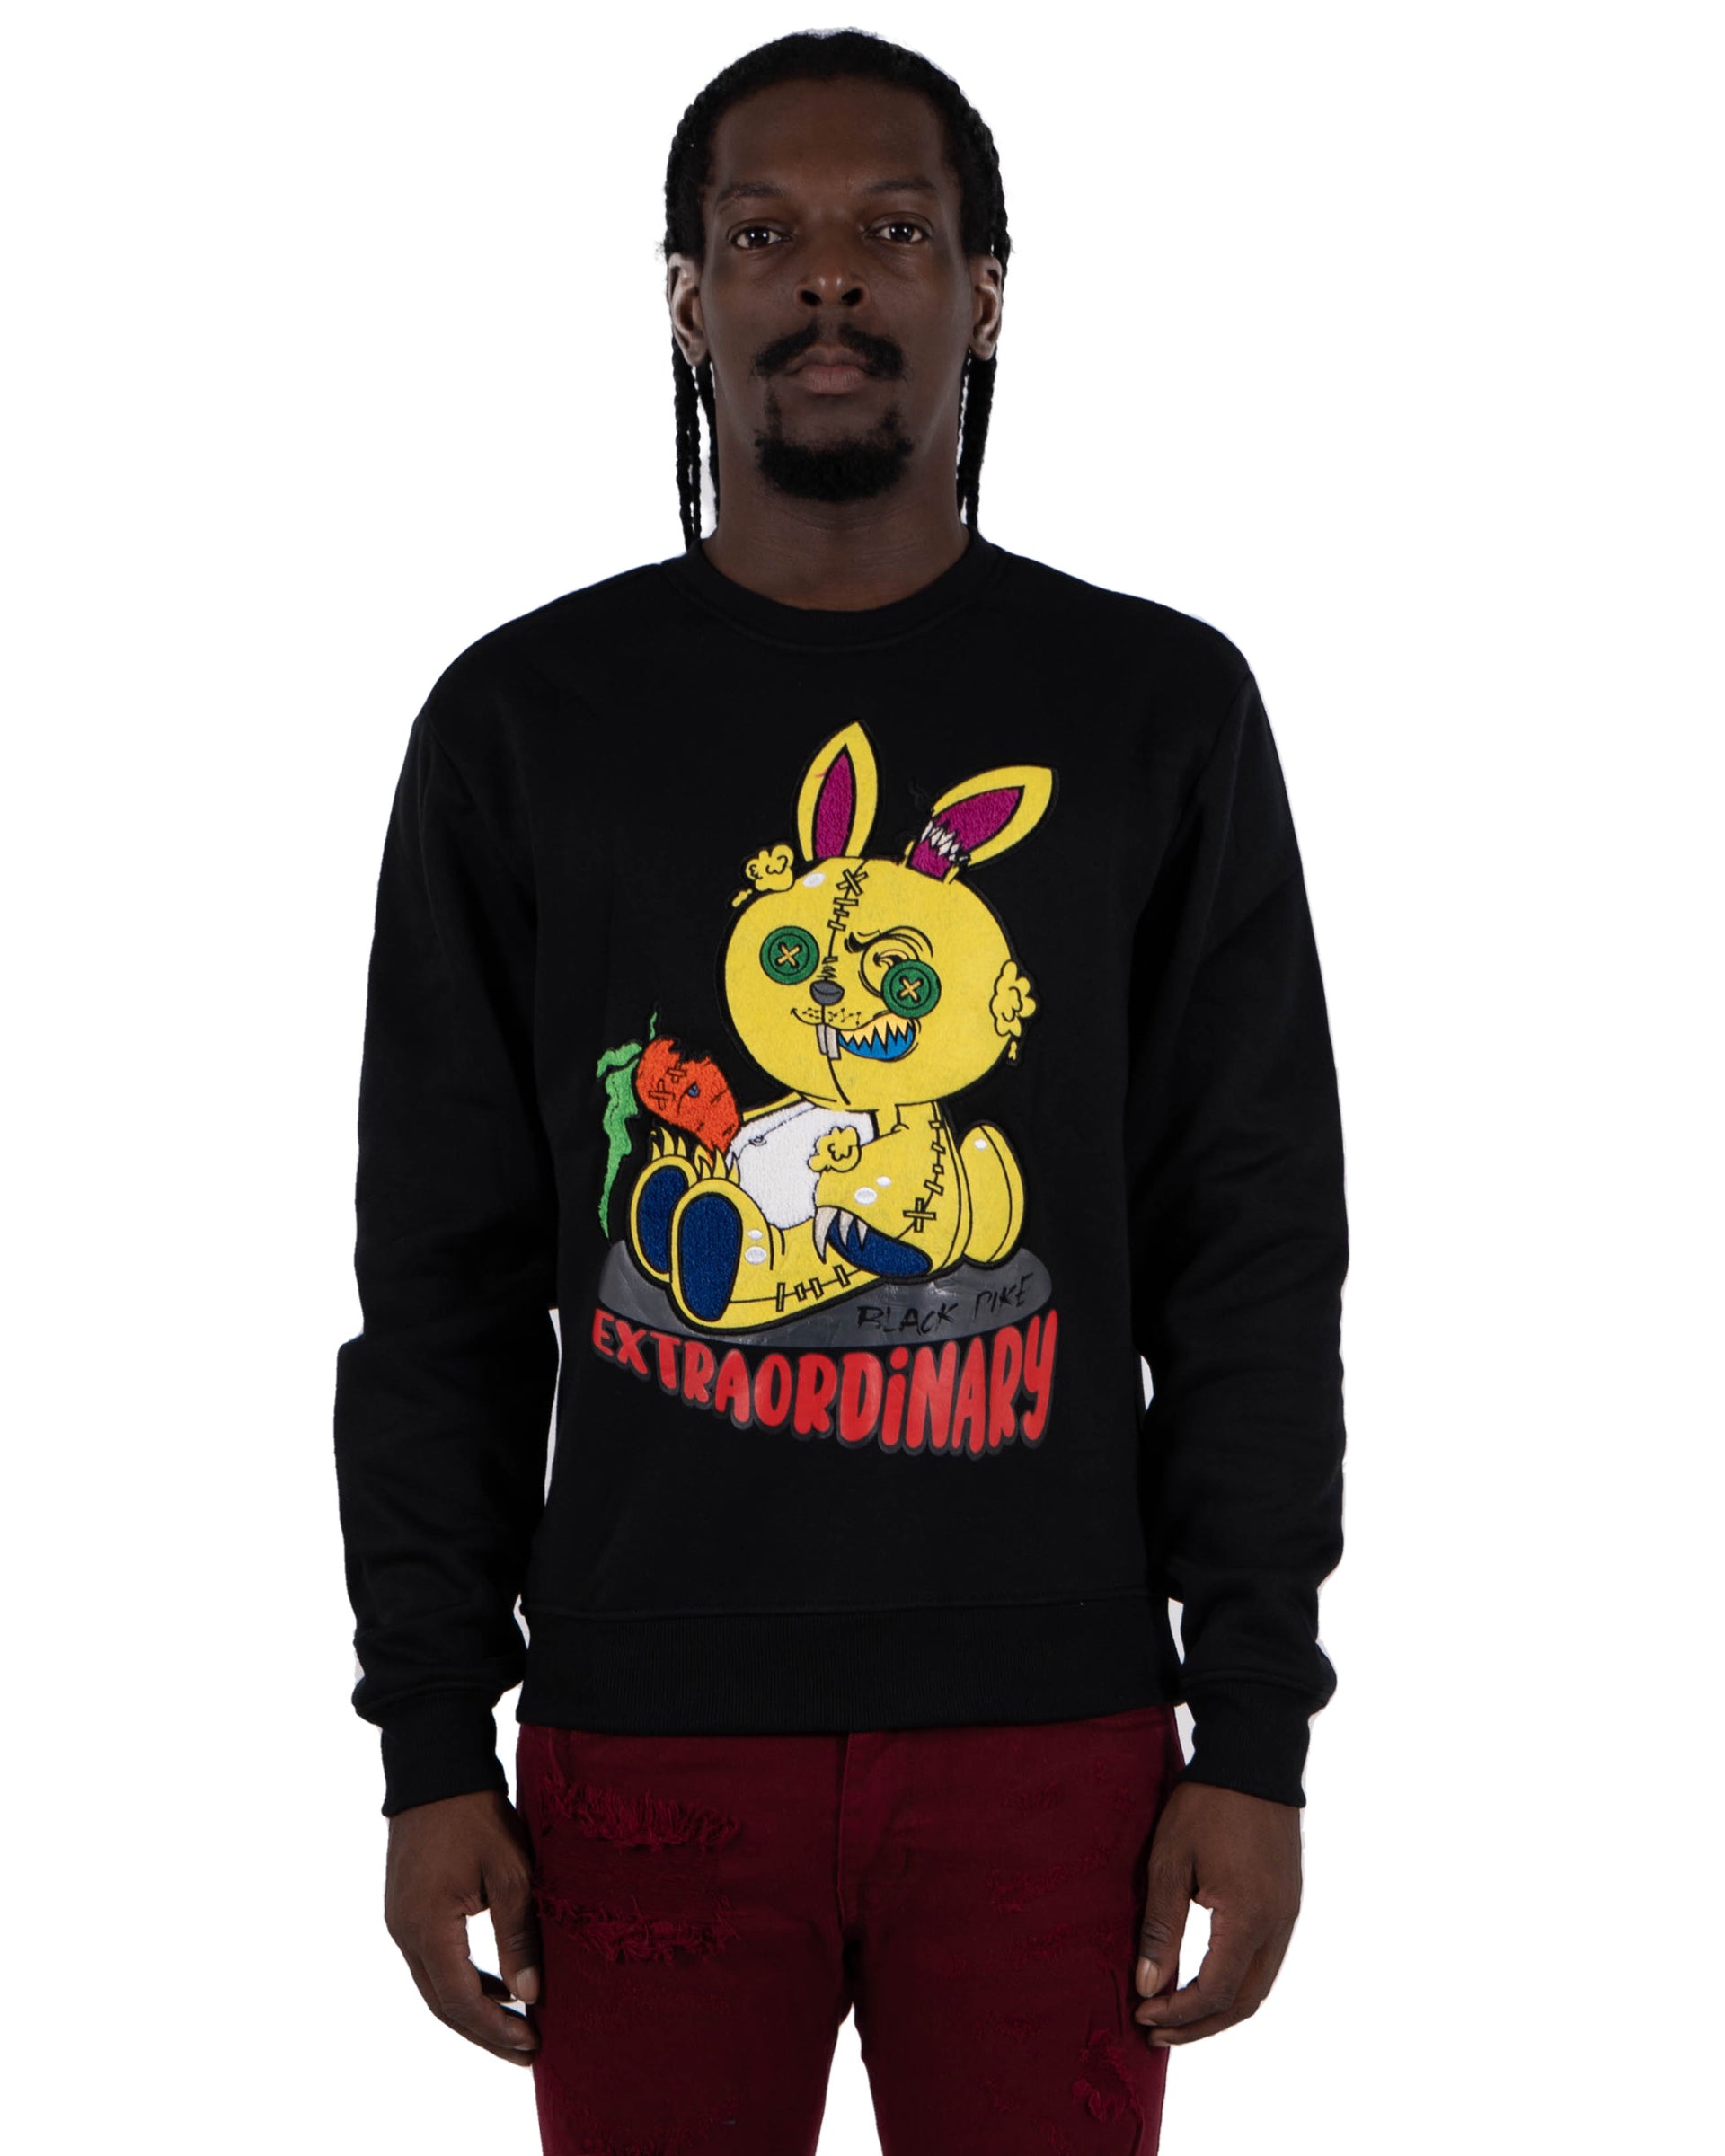 Men's "Extraordinary" Graphic Embroidered Sweatshirt | Black